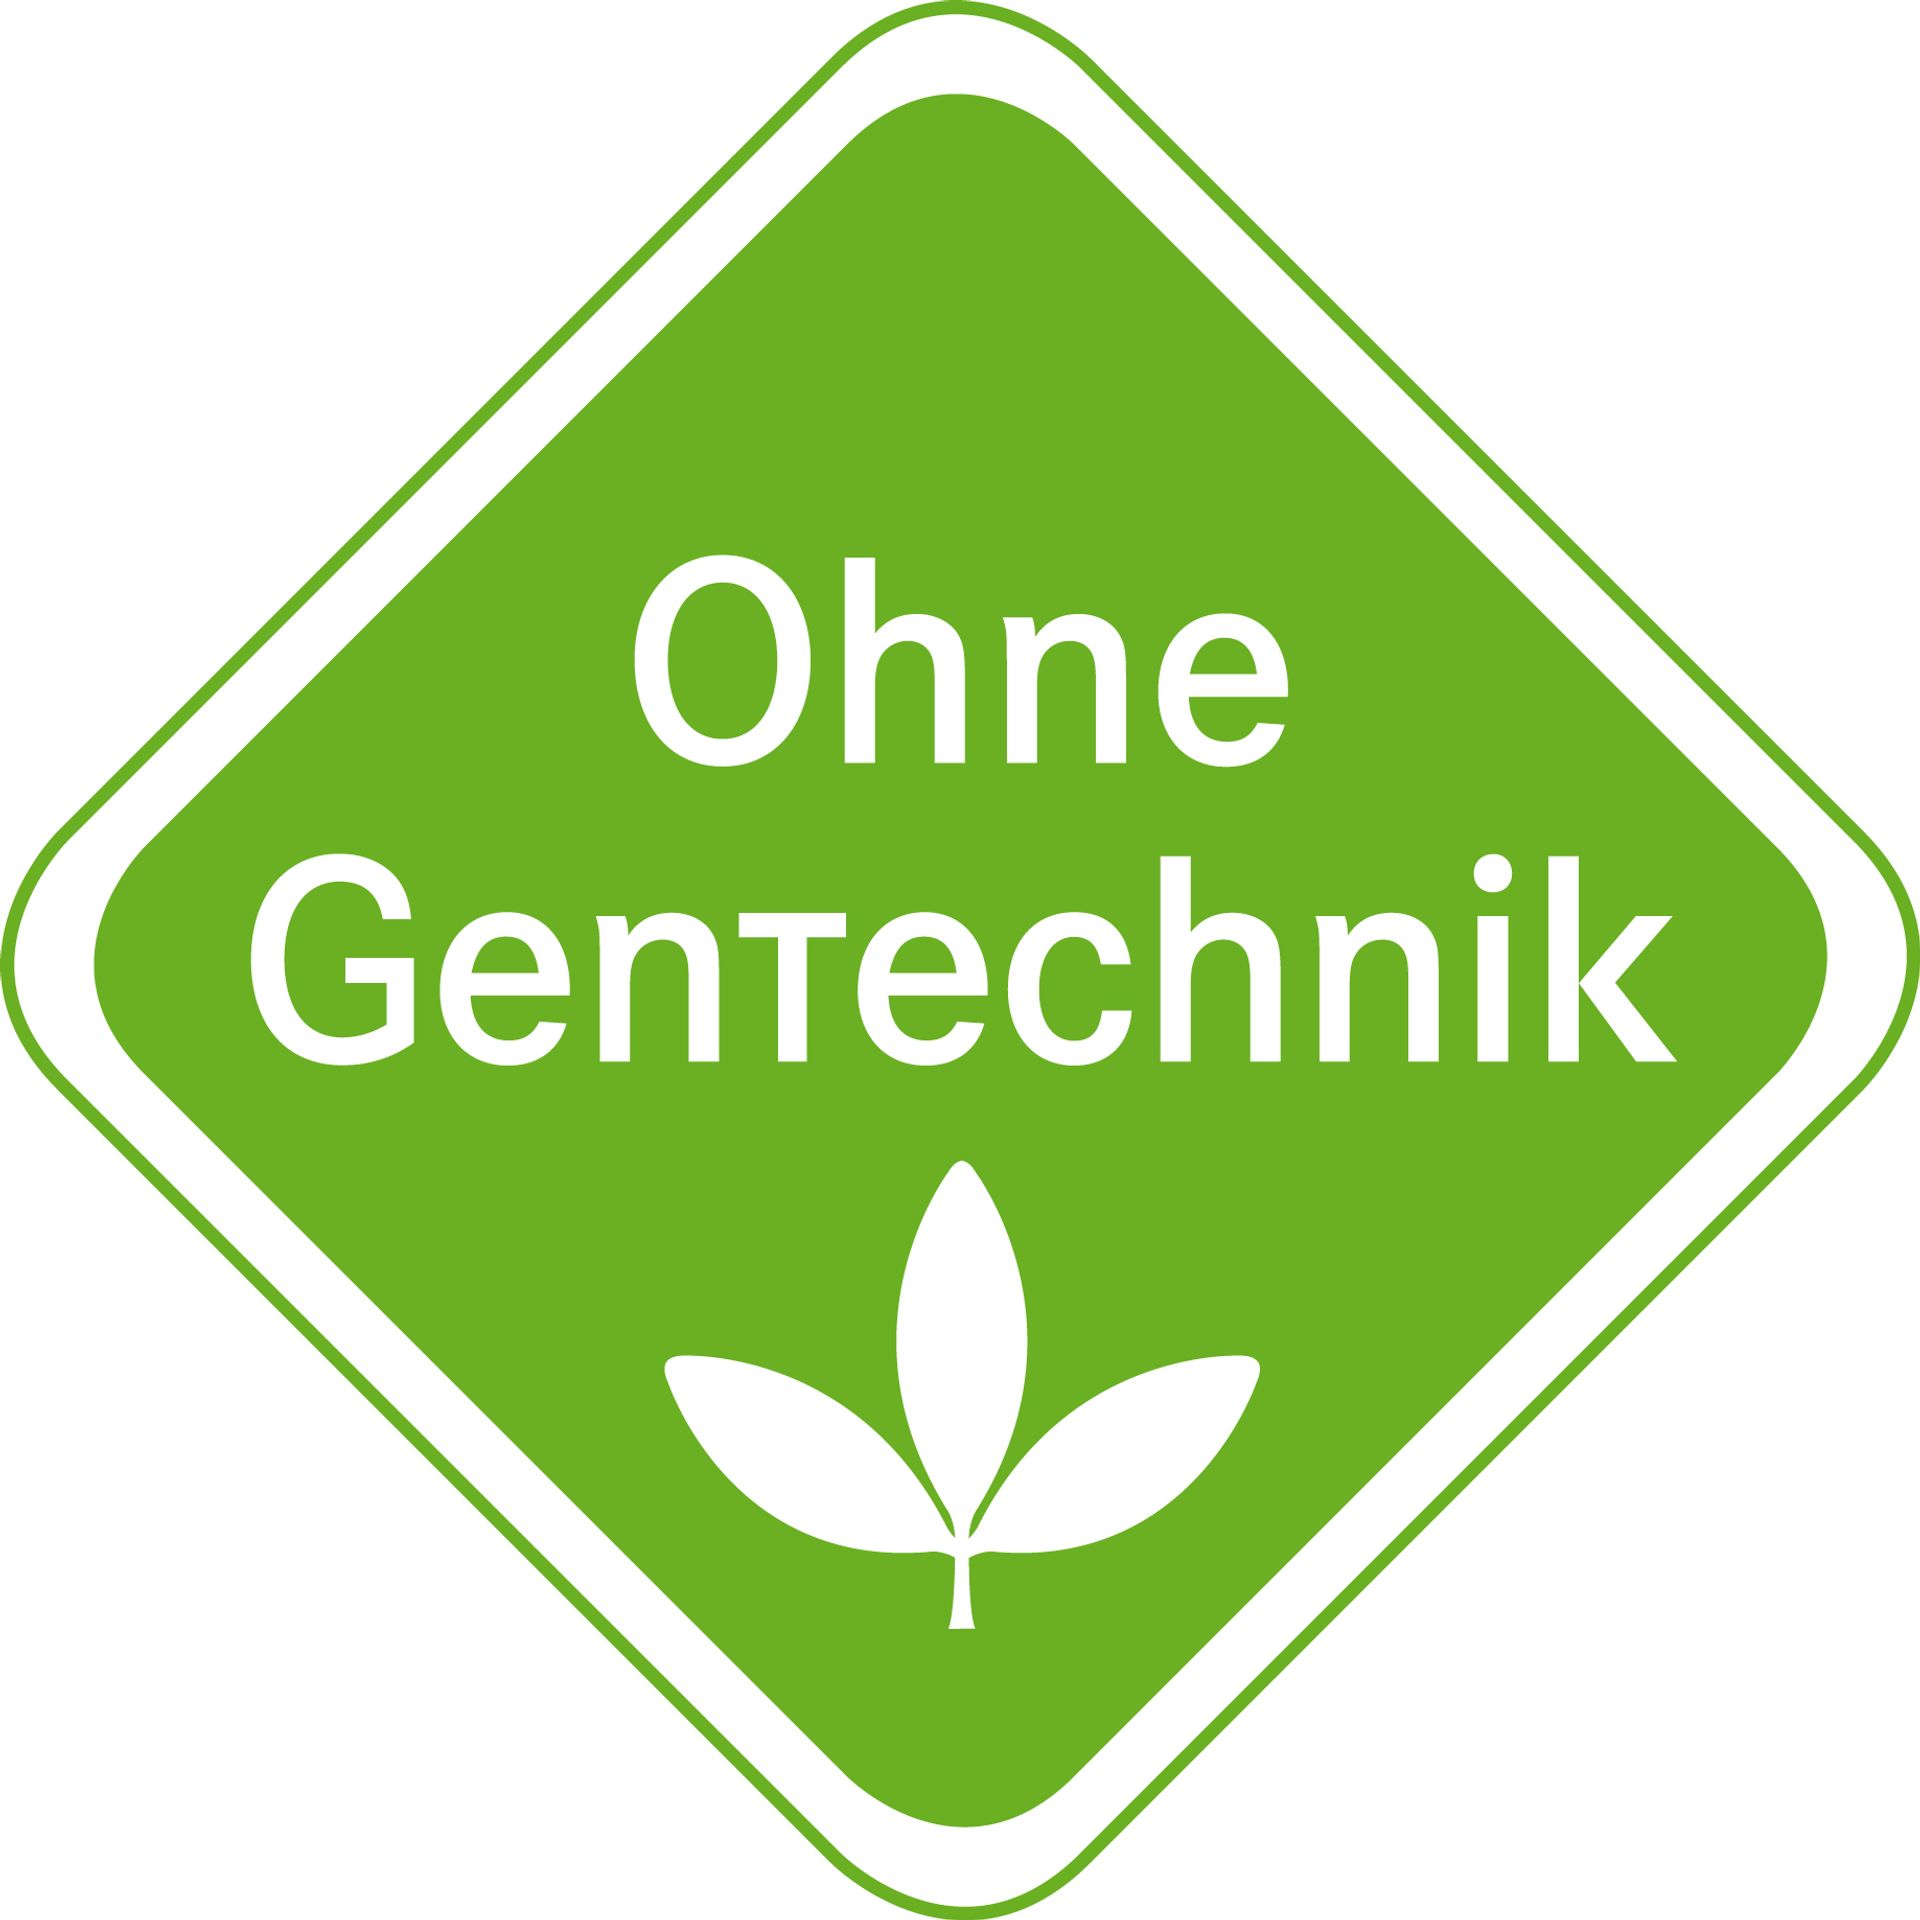 Image of the consumer-facing “Ohne GenTechnik” seal, licensed by the German Association for Food without Genetic Engineering (Verband Lebensmittel ohne Gentechnik e.V., VLOG)